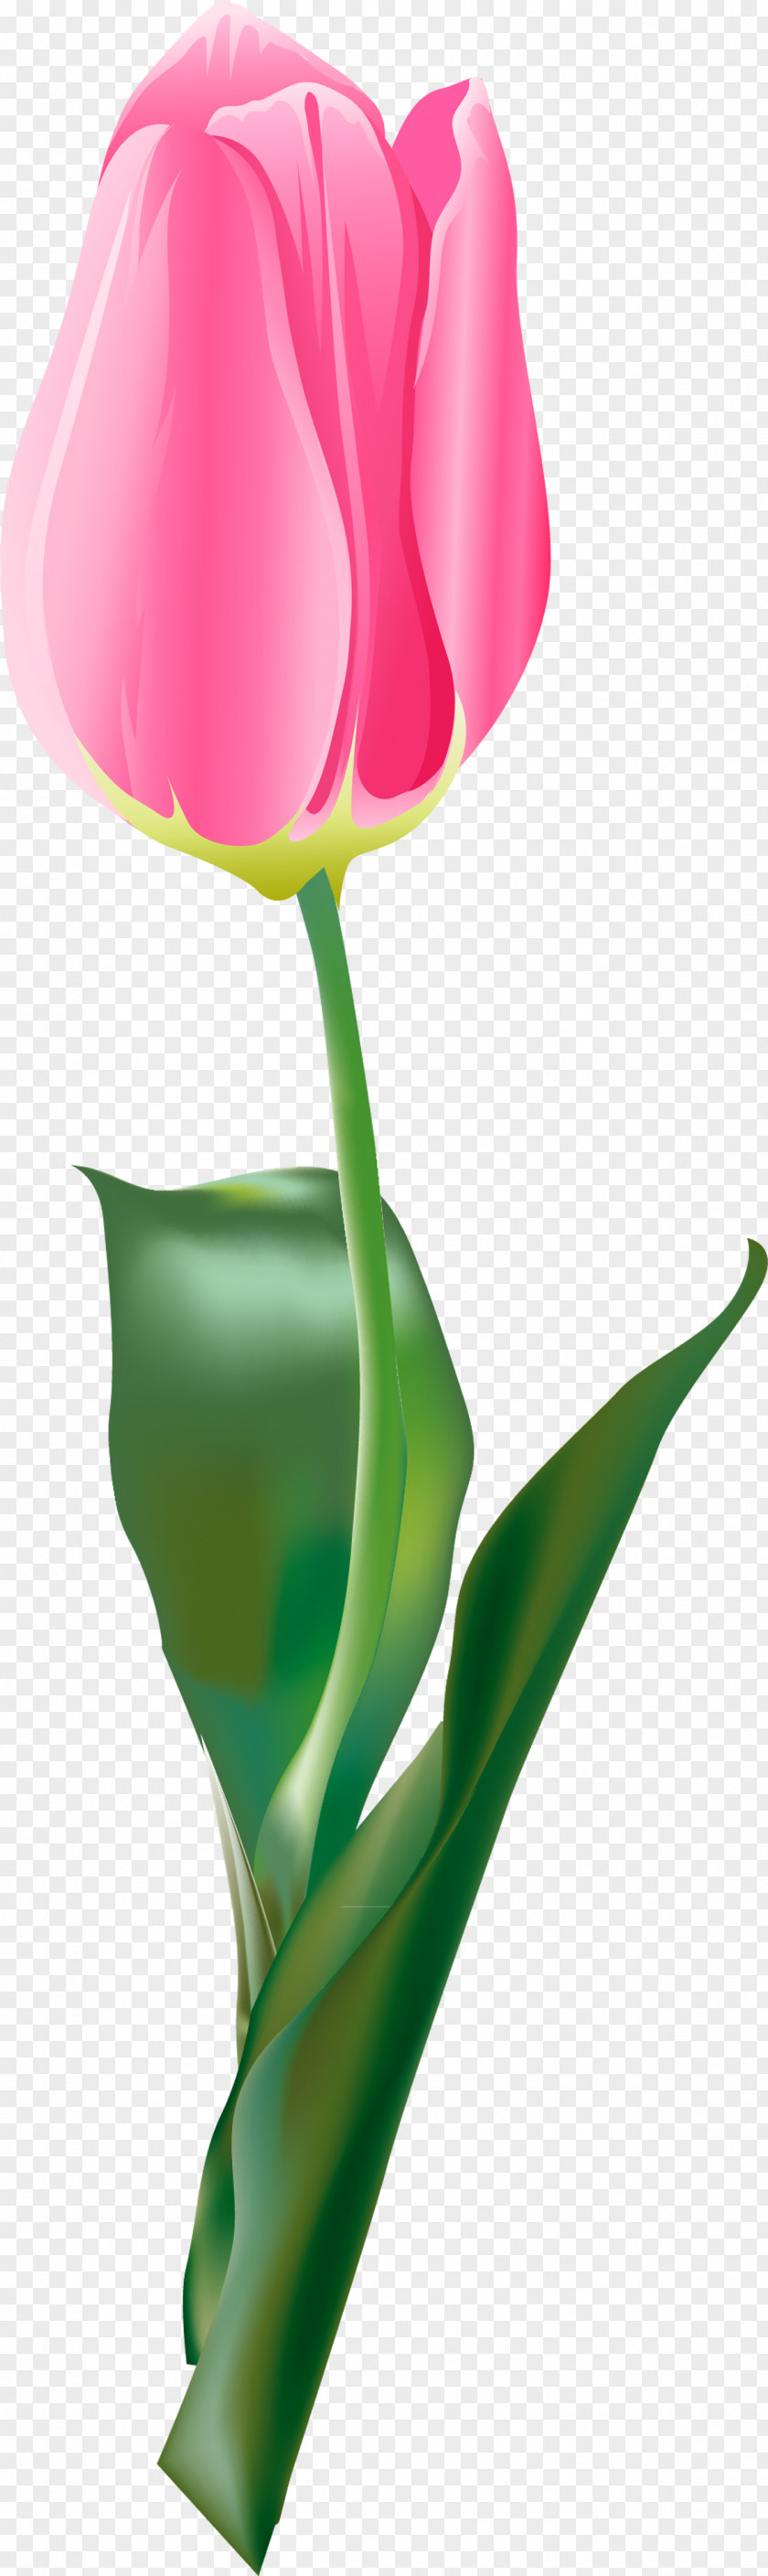 Tulips Tulip Flower PNG